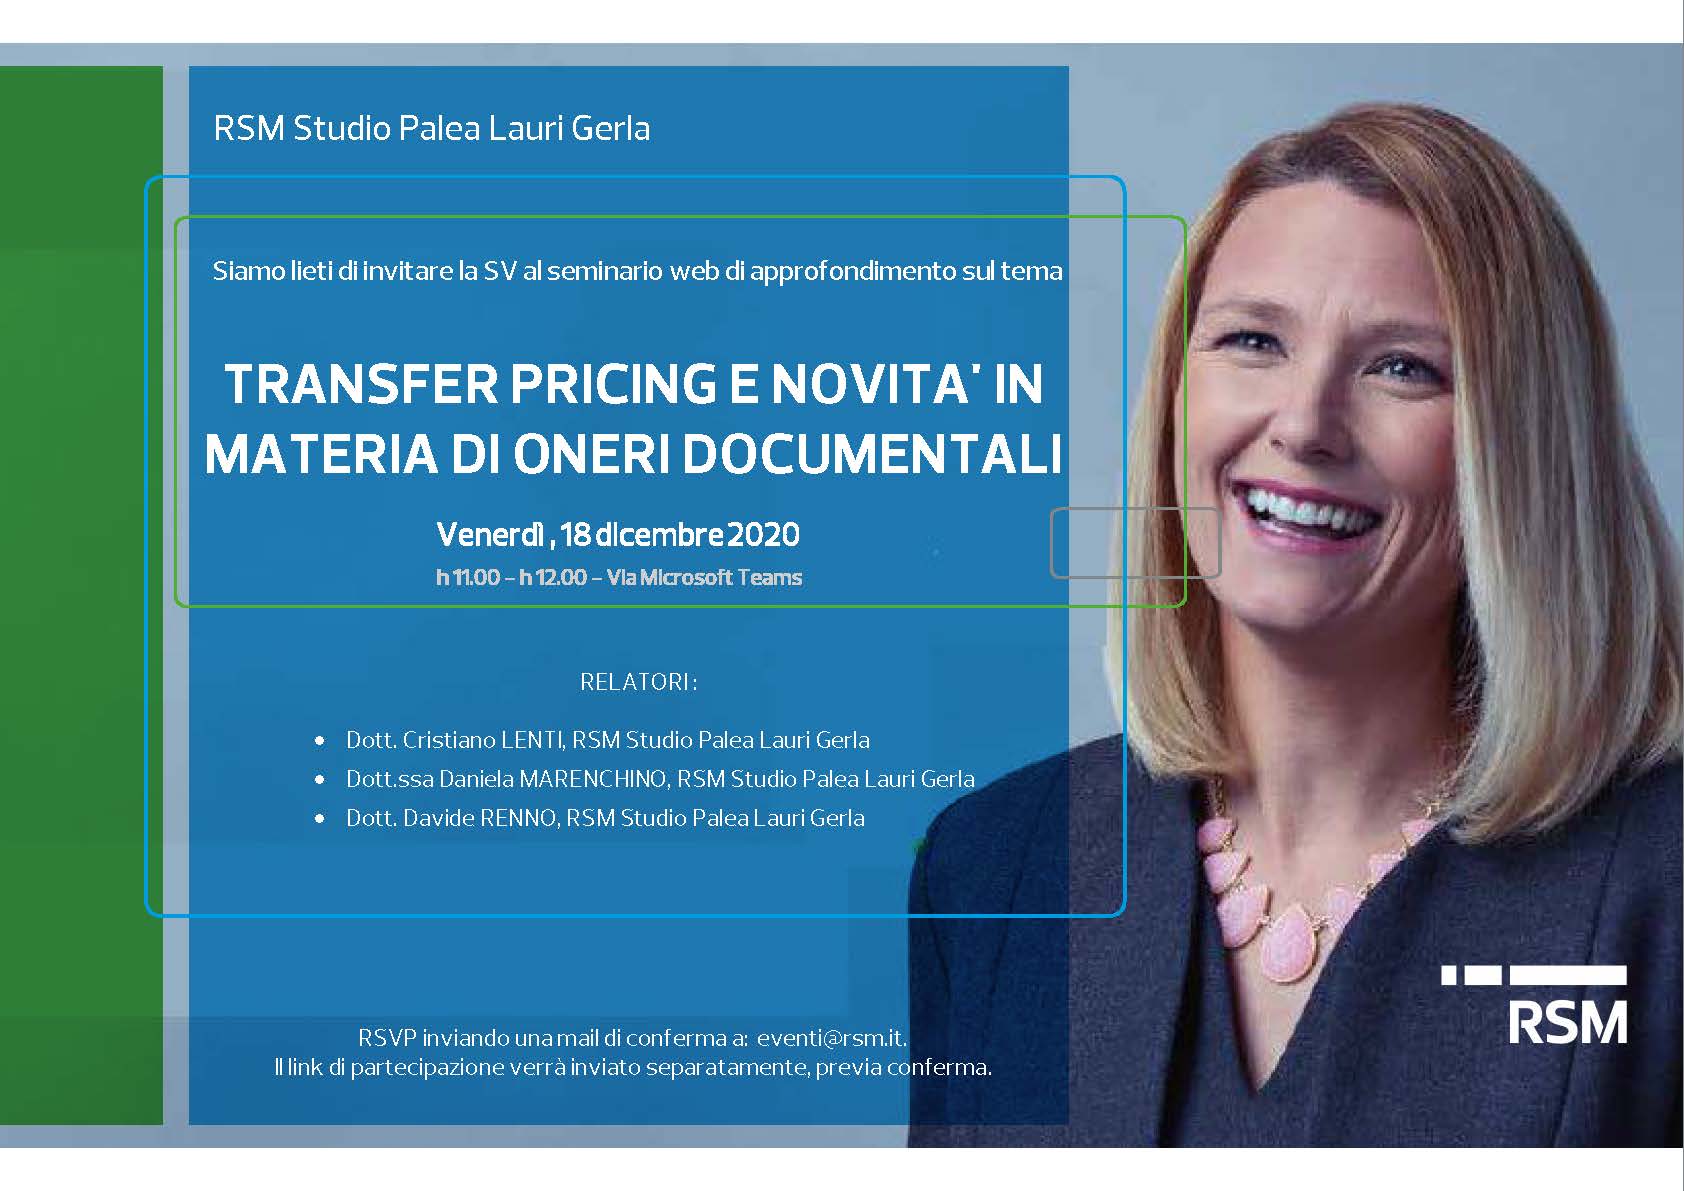 Webcast_Transfer_Pricing_novita_documentali_18dicembre_2020_Torino